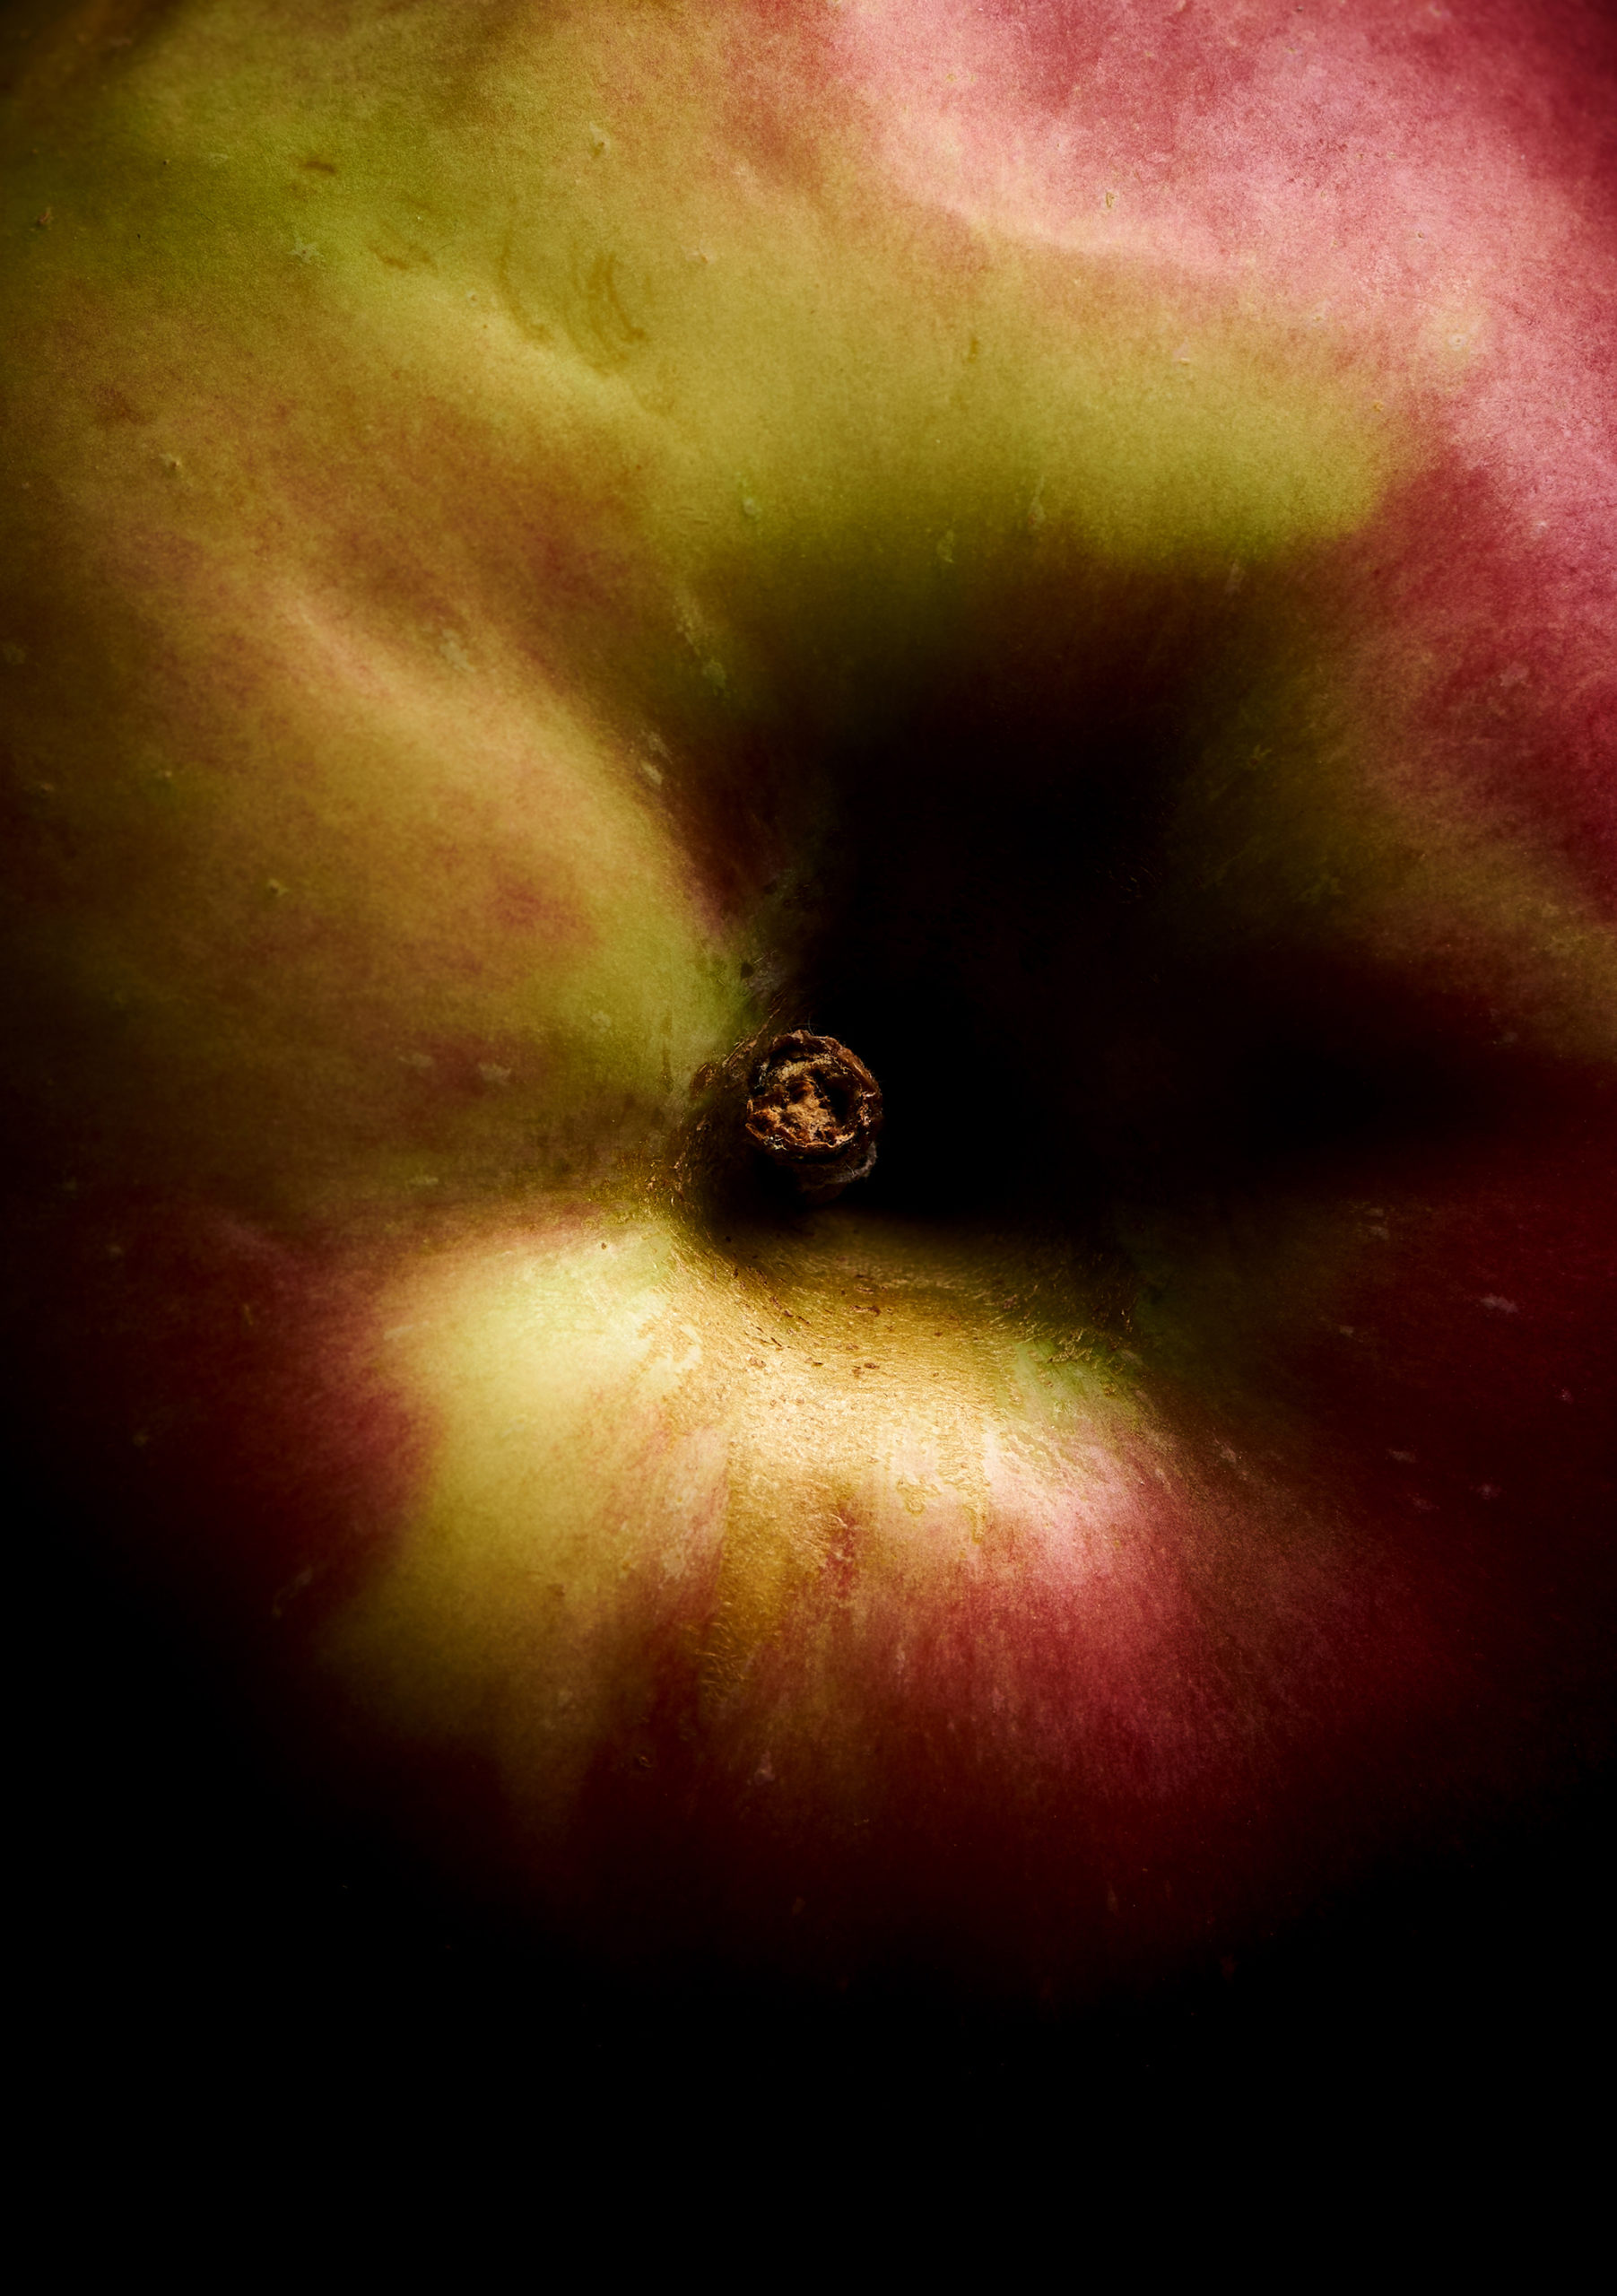 Macro image of an apple